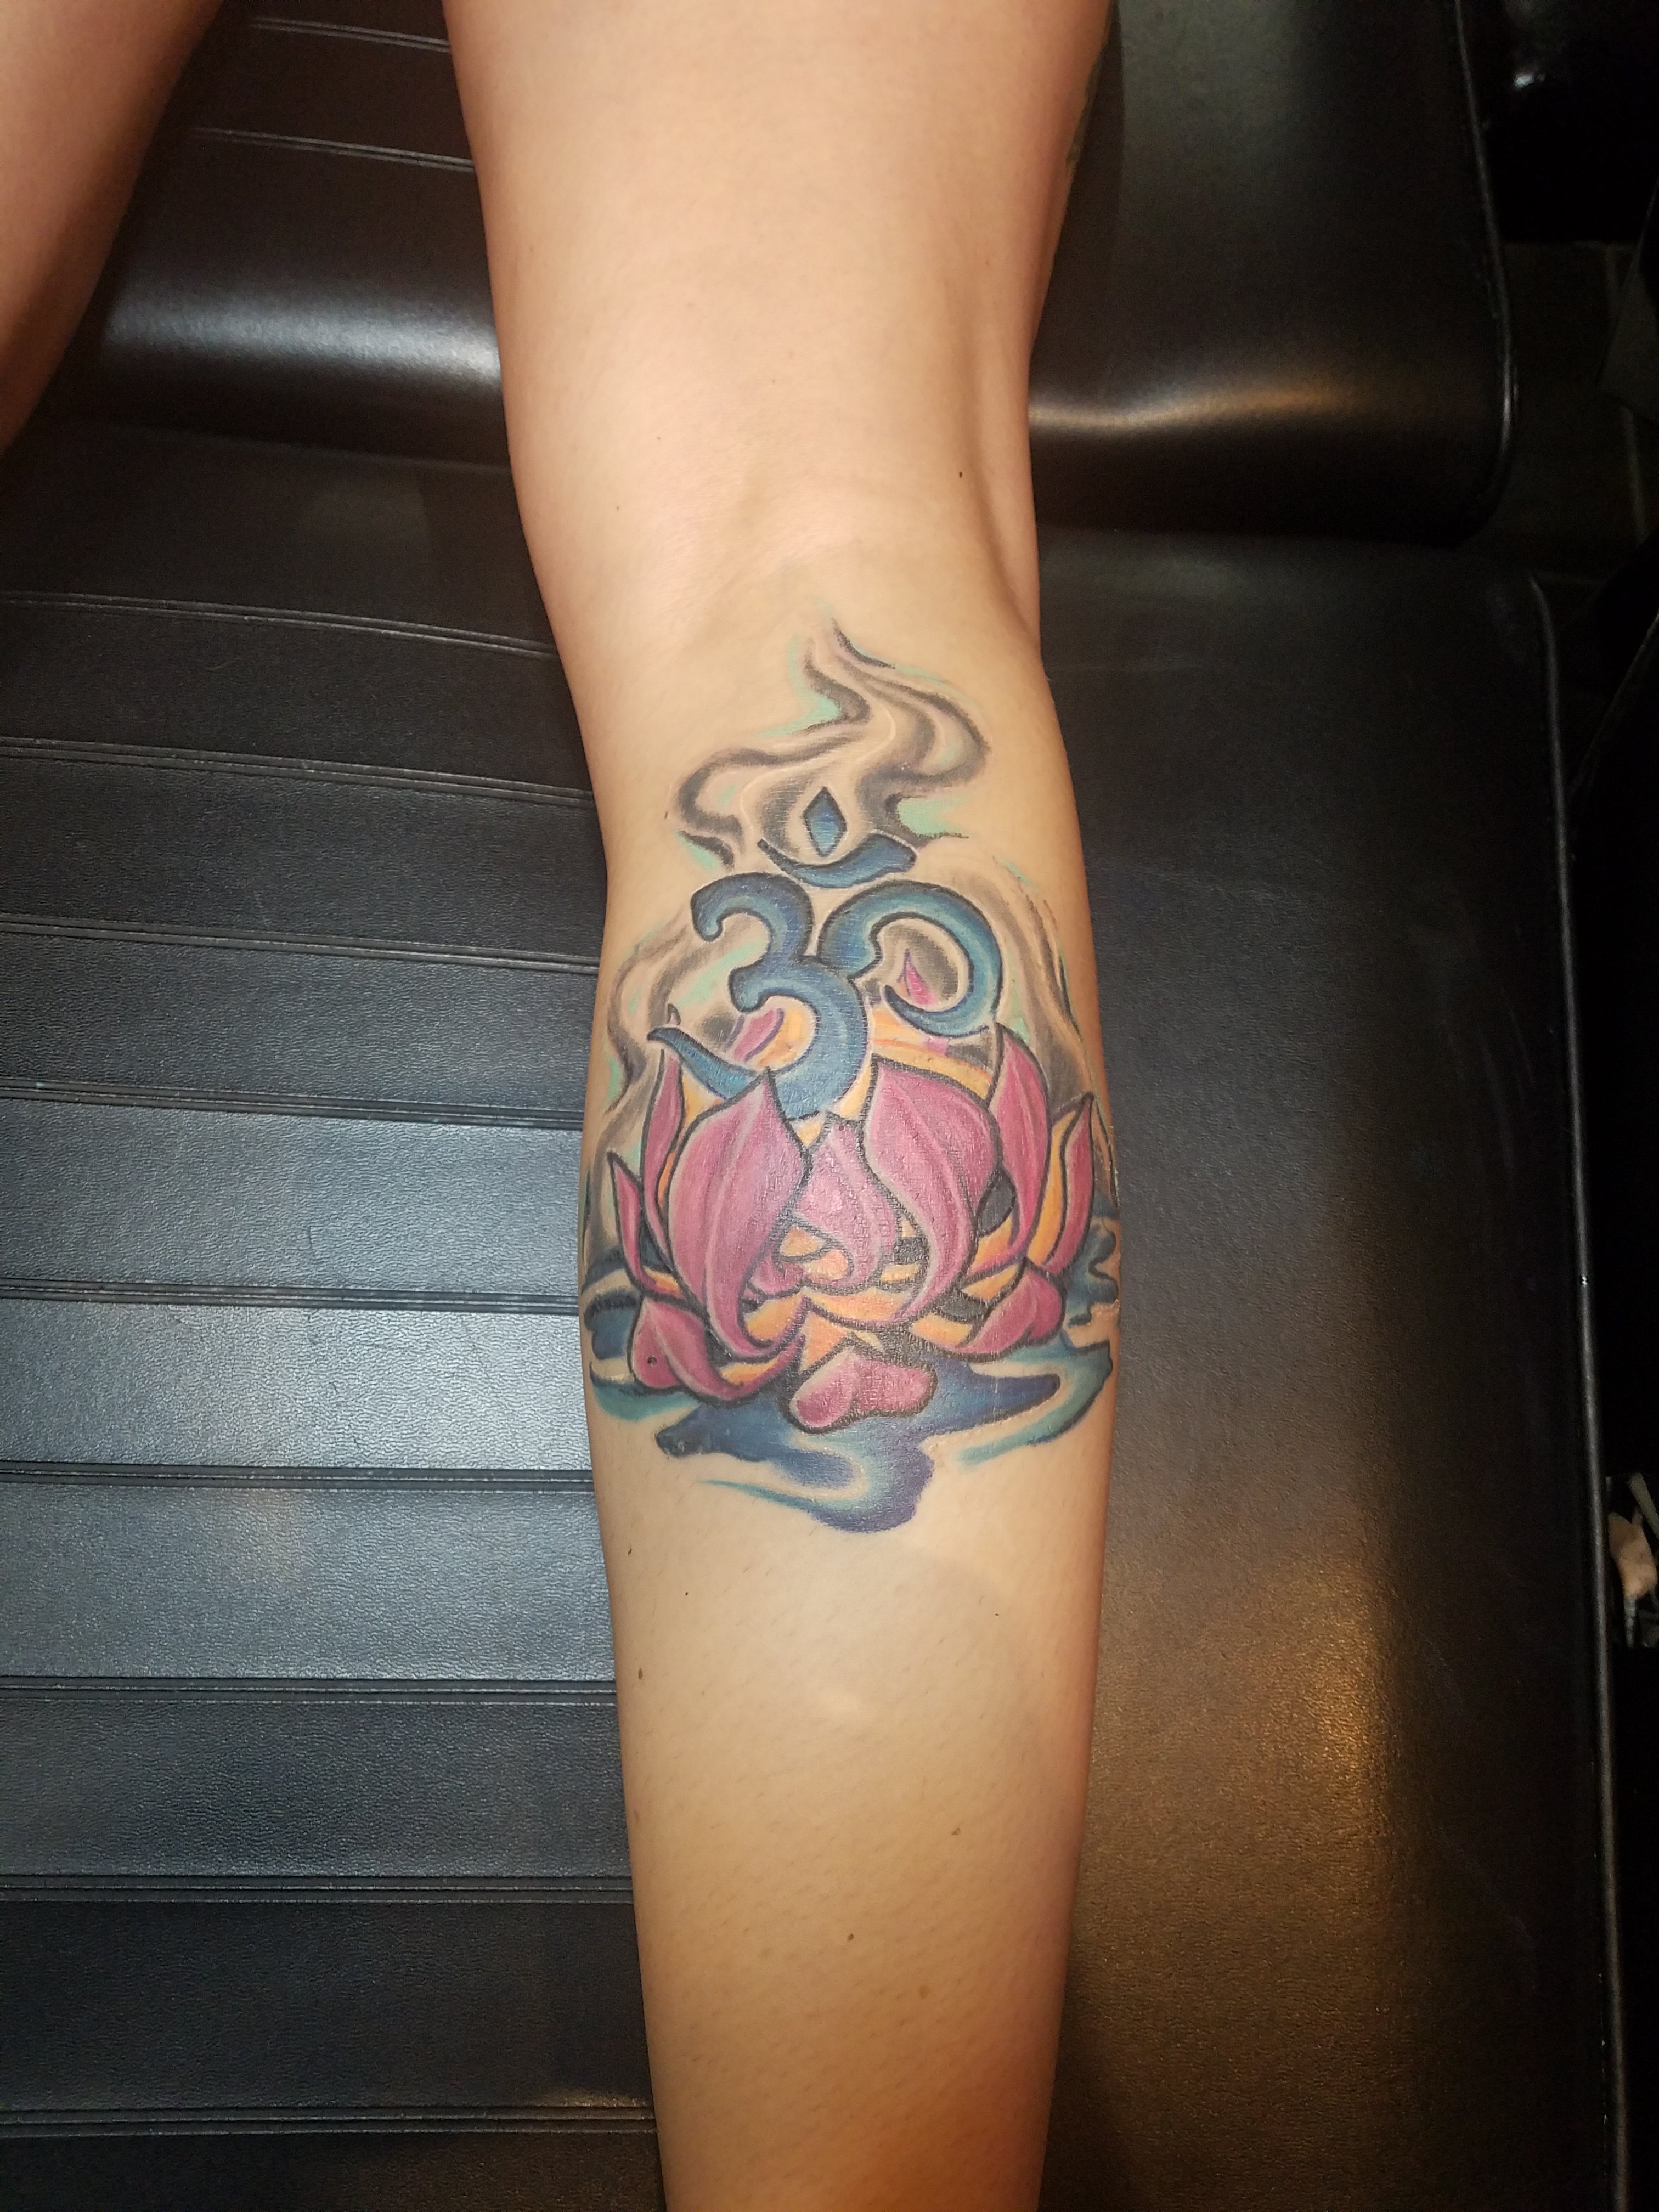 Flaming heart tatto